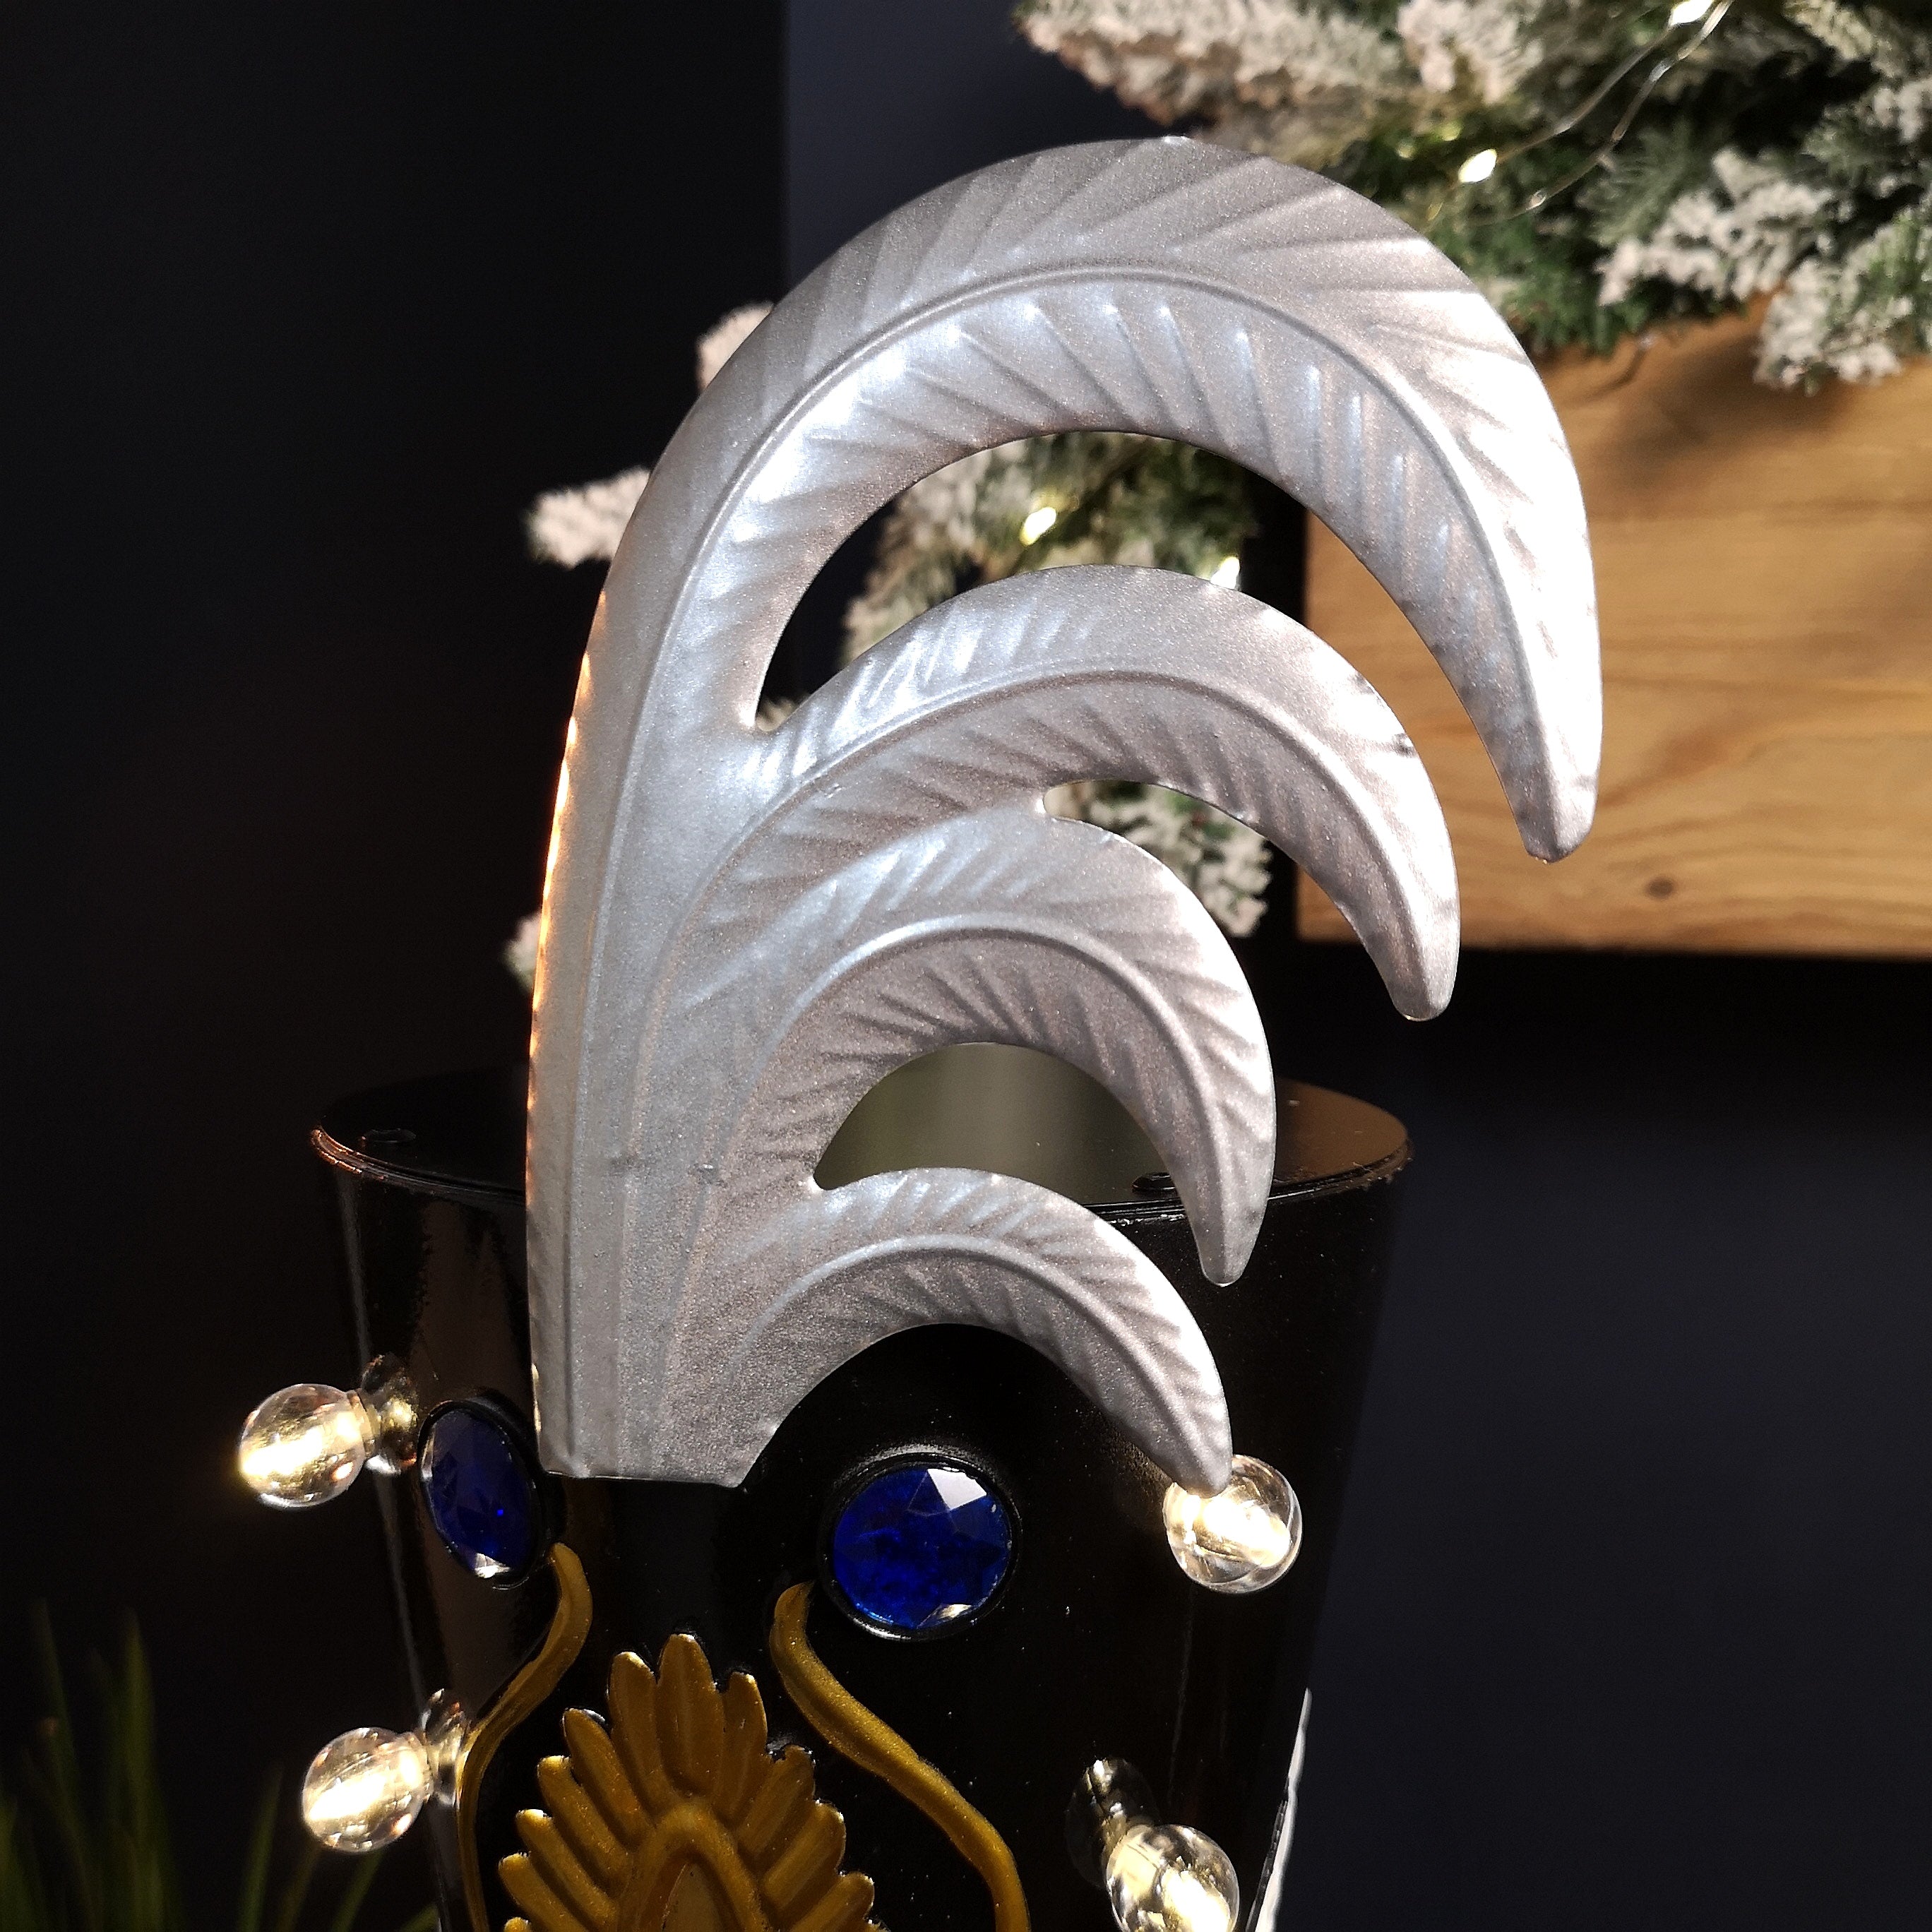 119cm Light Up Nutcracker Soldier LED Christmas Wooden Ornament Home Decoration